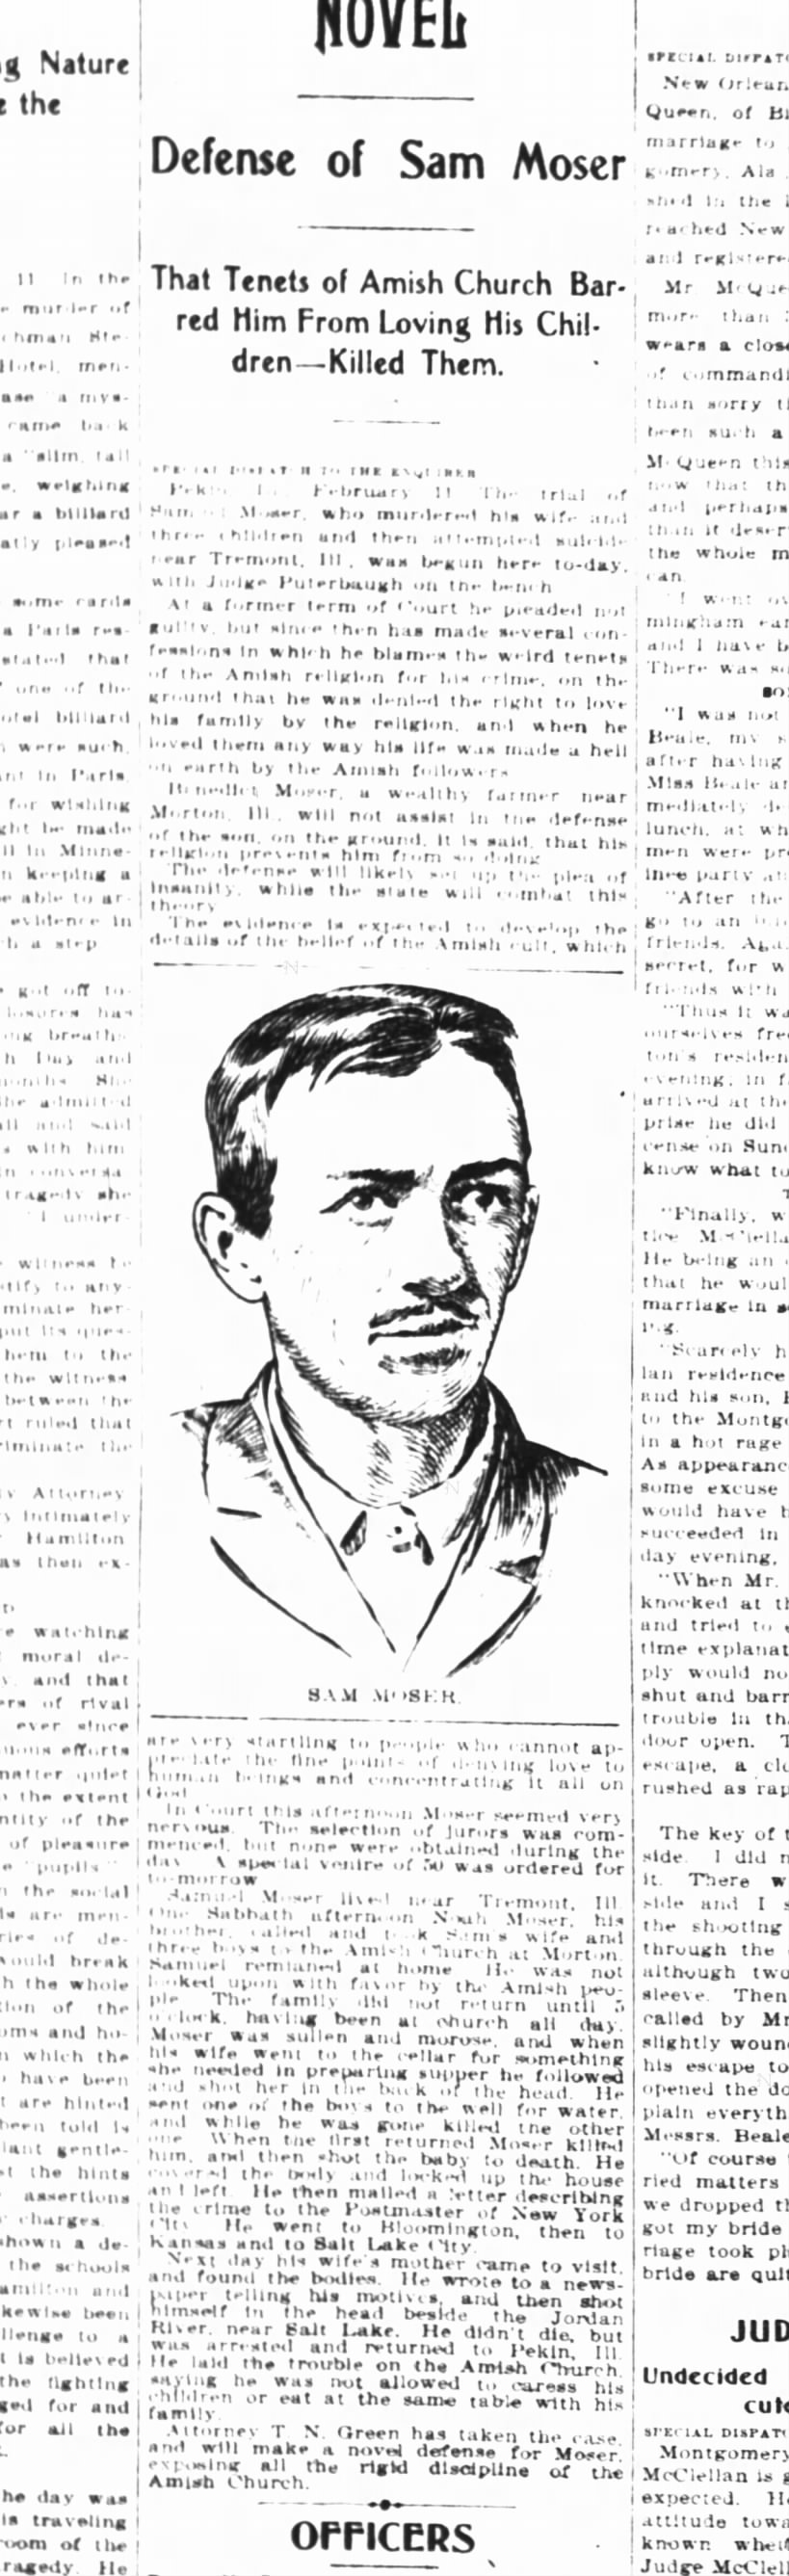 Cincinnati Enquirer 2.12.1901 PEN DRAWING OF SAM